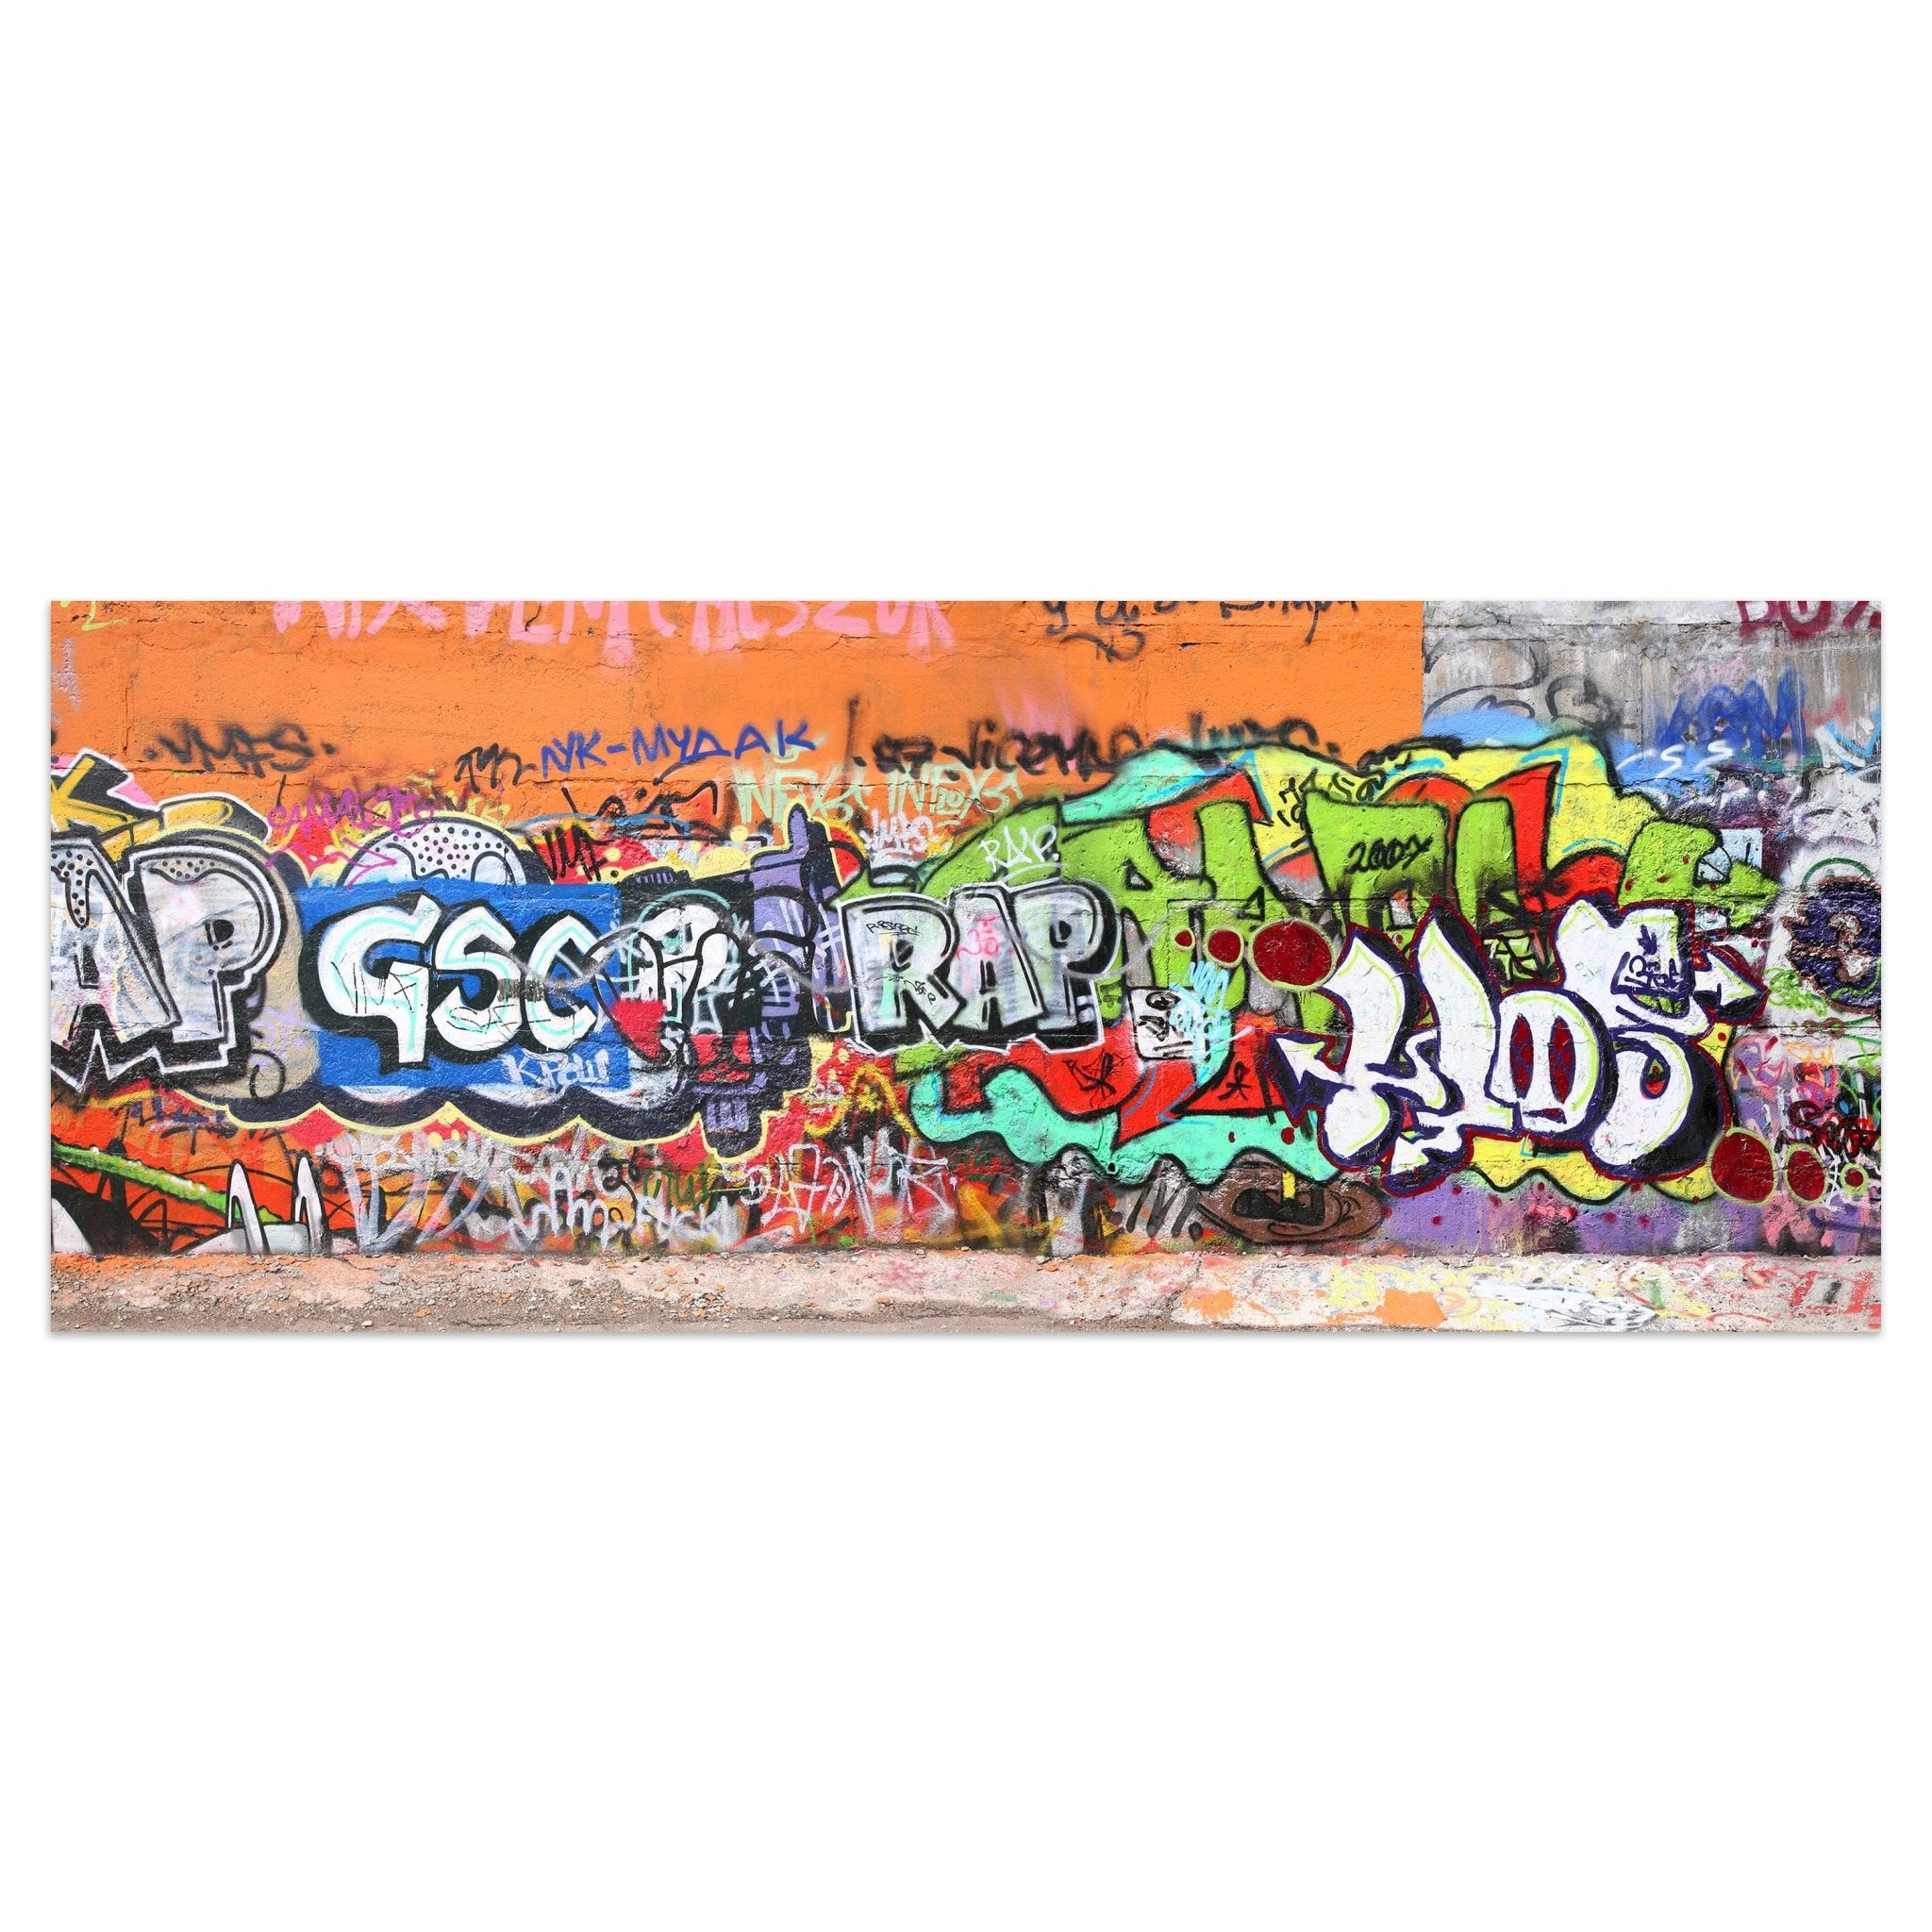 Leinwandbild Graffiti 1 M0025 kaufen - Bild 1